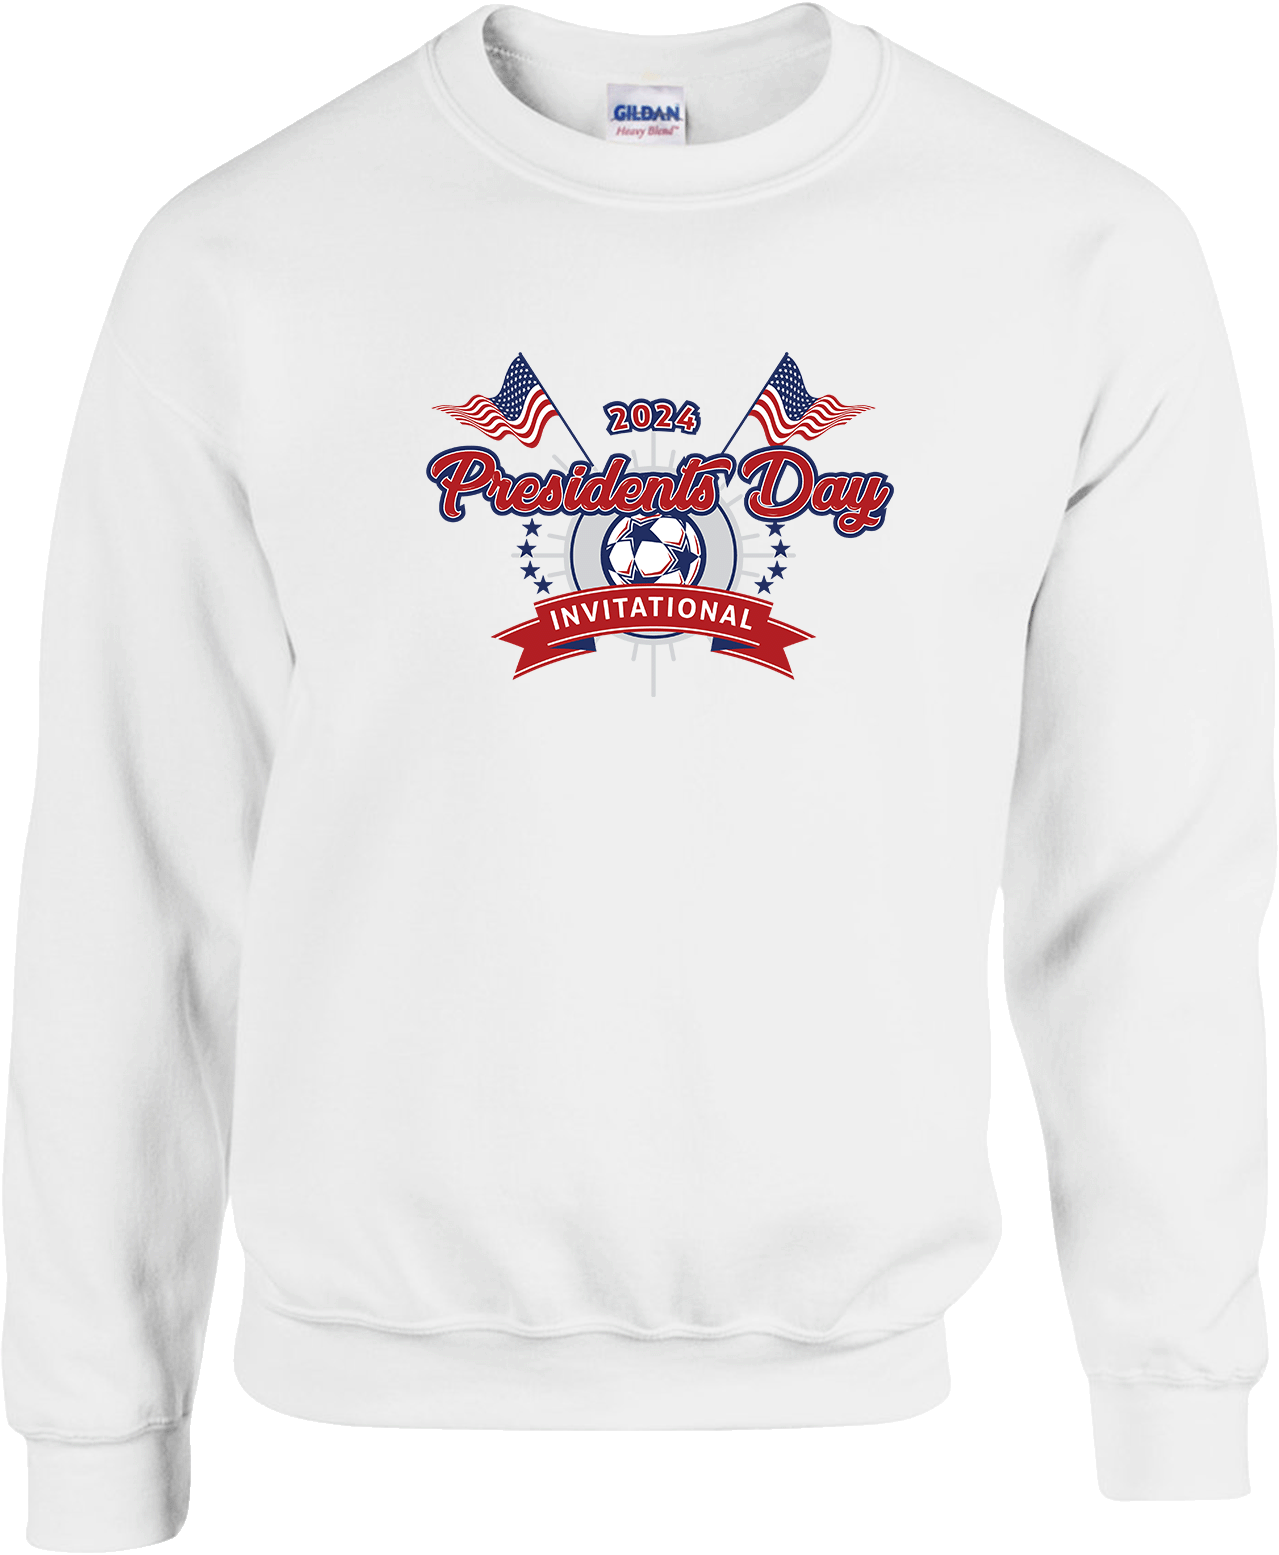 Crew Sweatershirt - 2024 Presidents Day Invitational